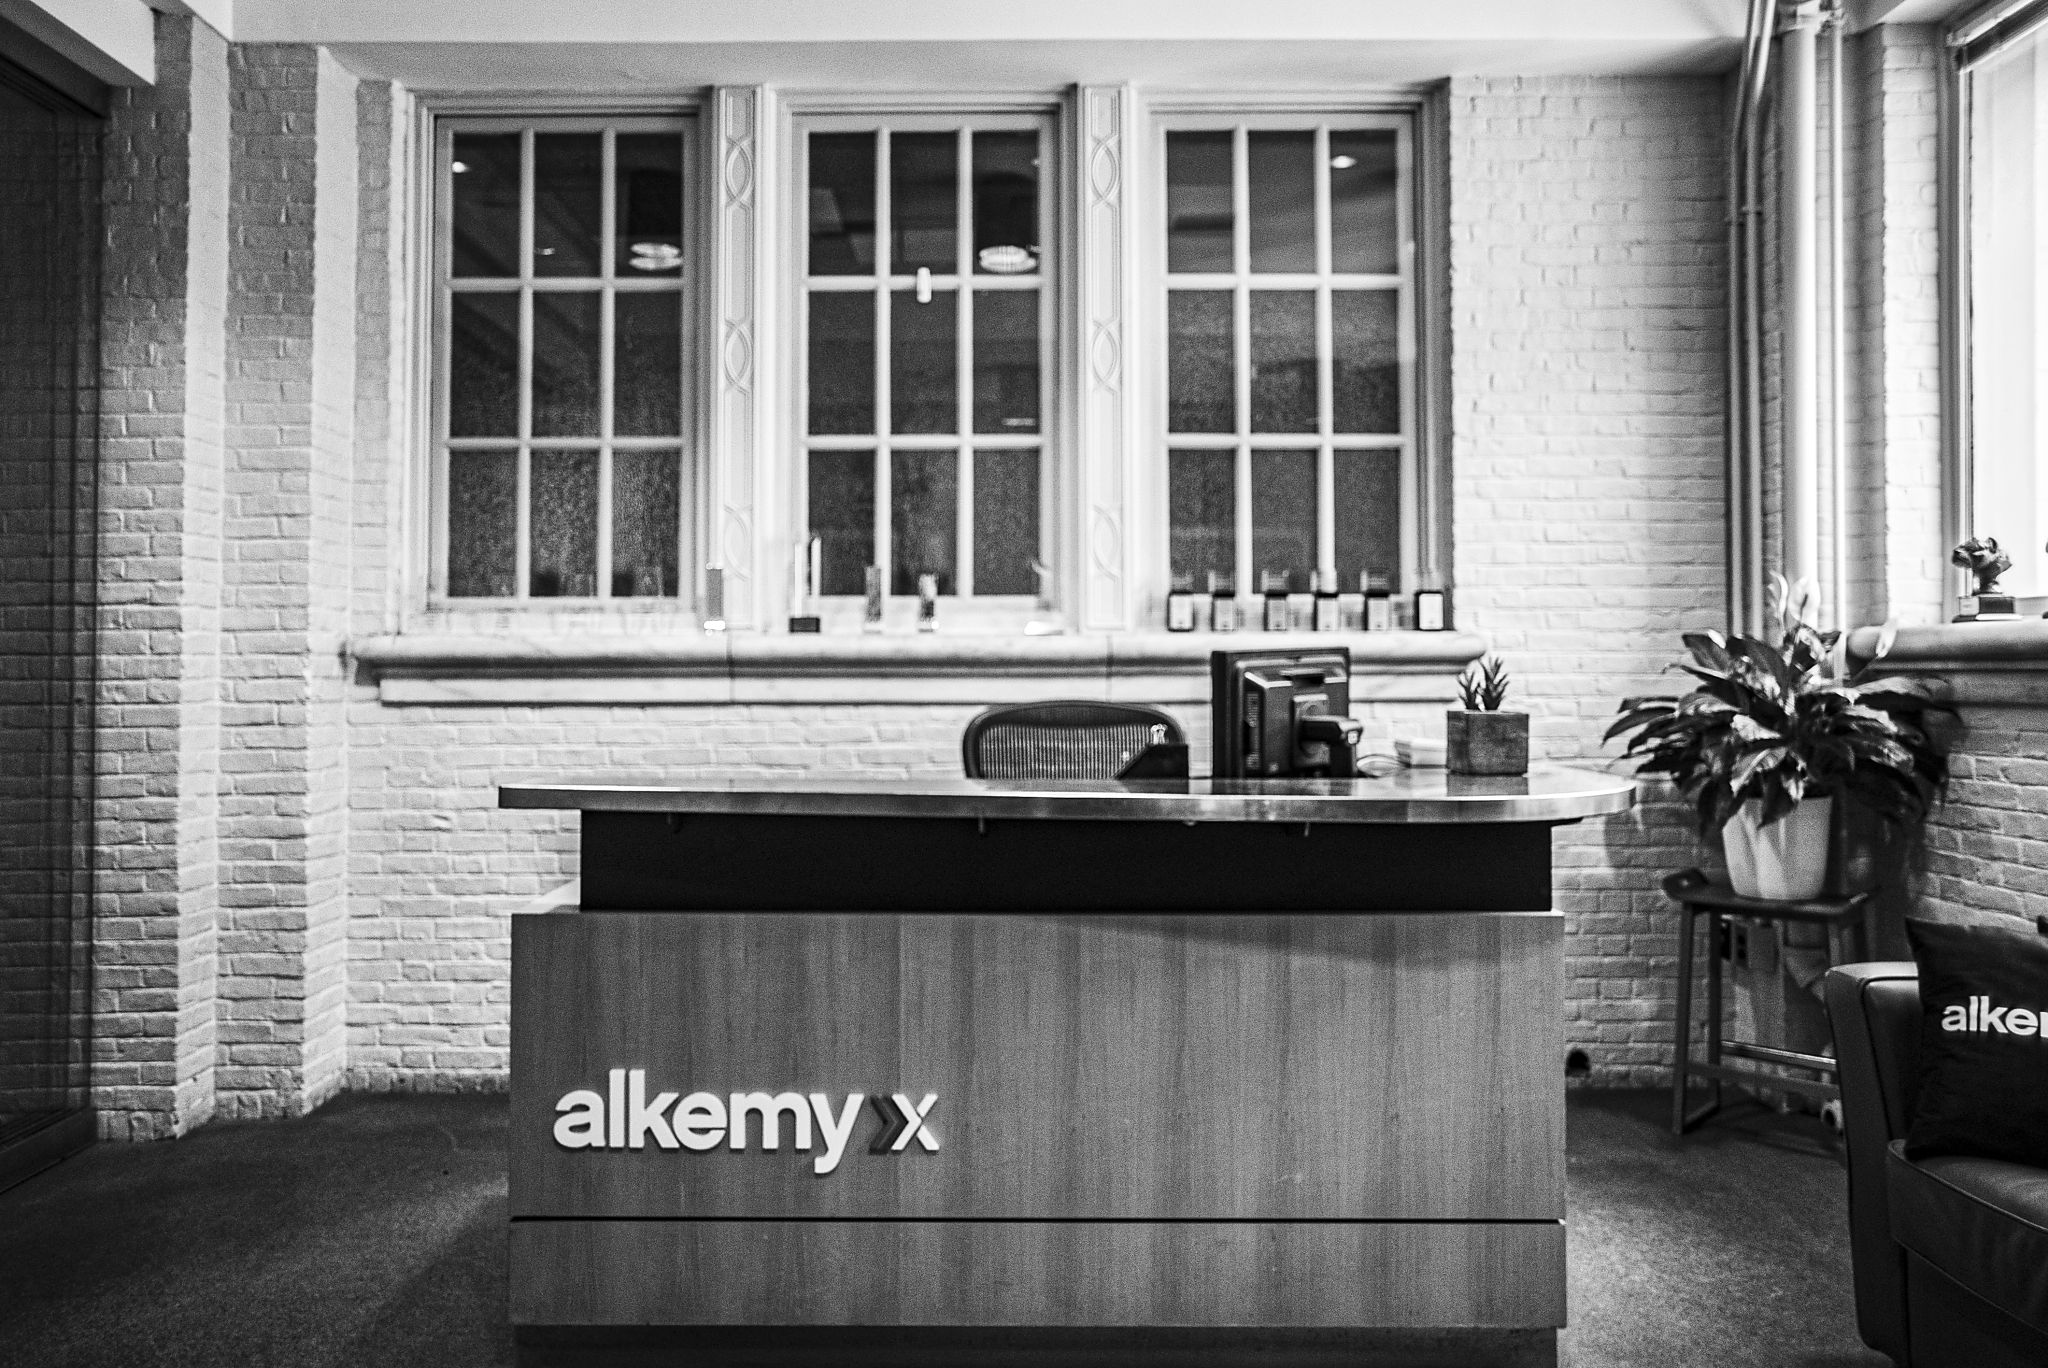 Alkemy X in Philadelphia